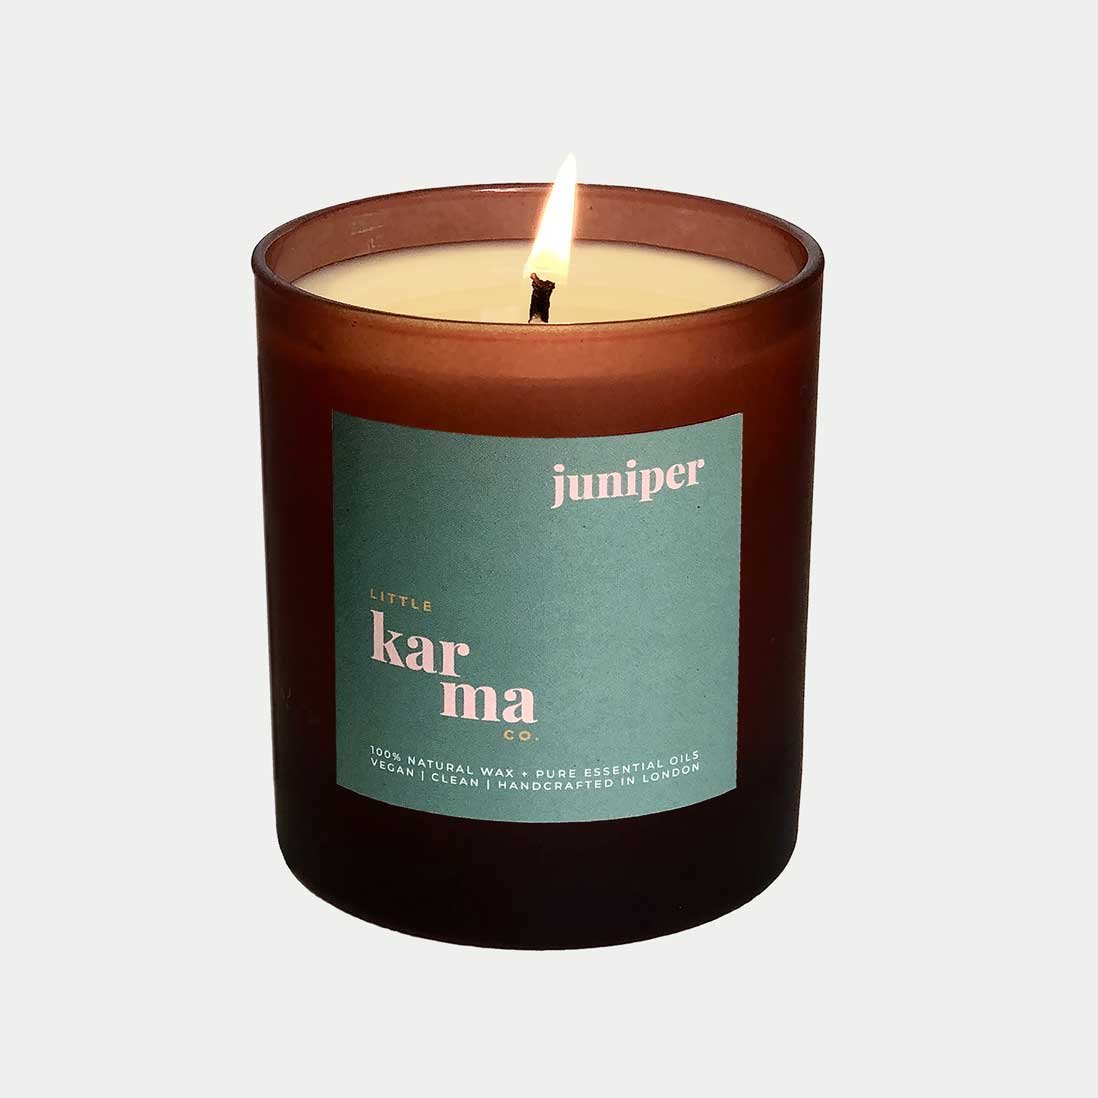 Juniper grounding cedarwood and evergreens refillable candle